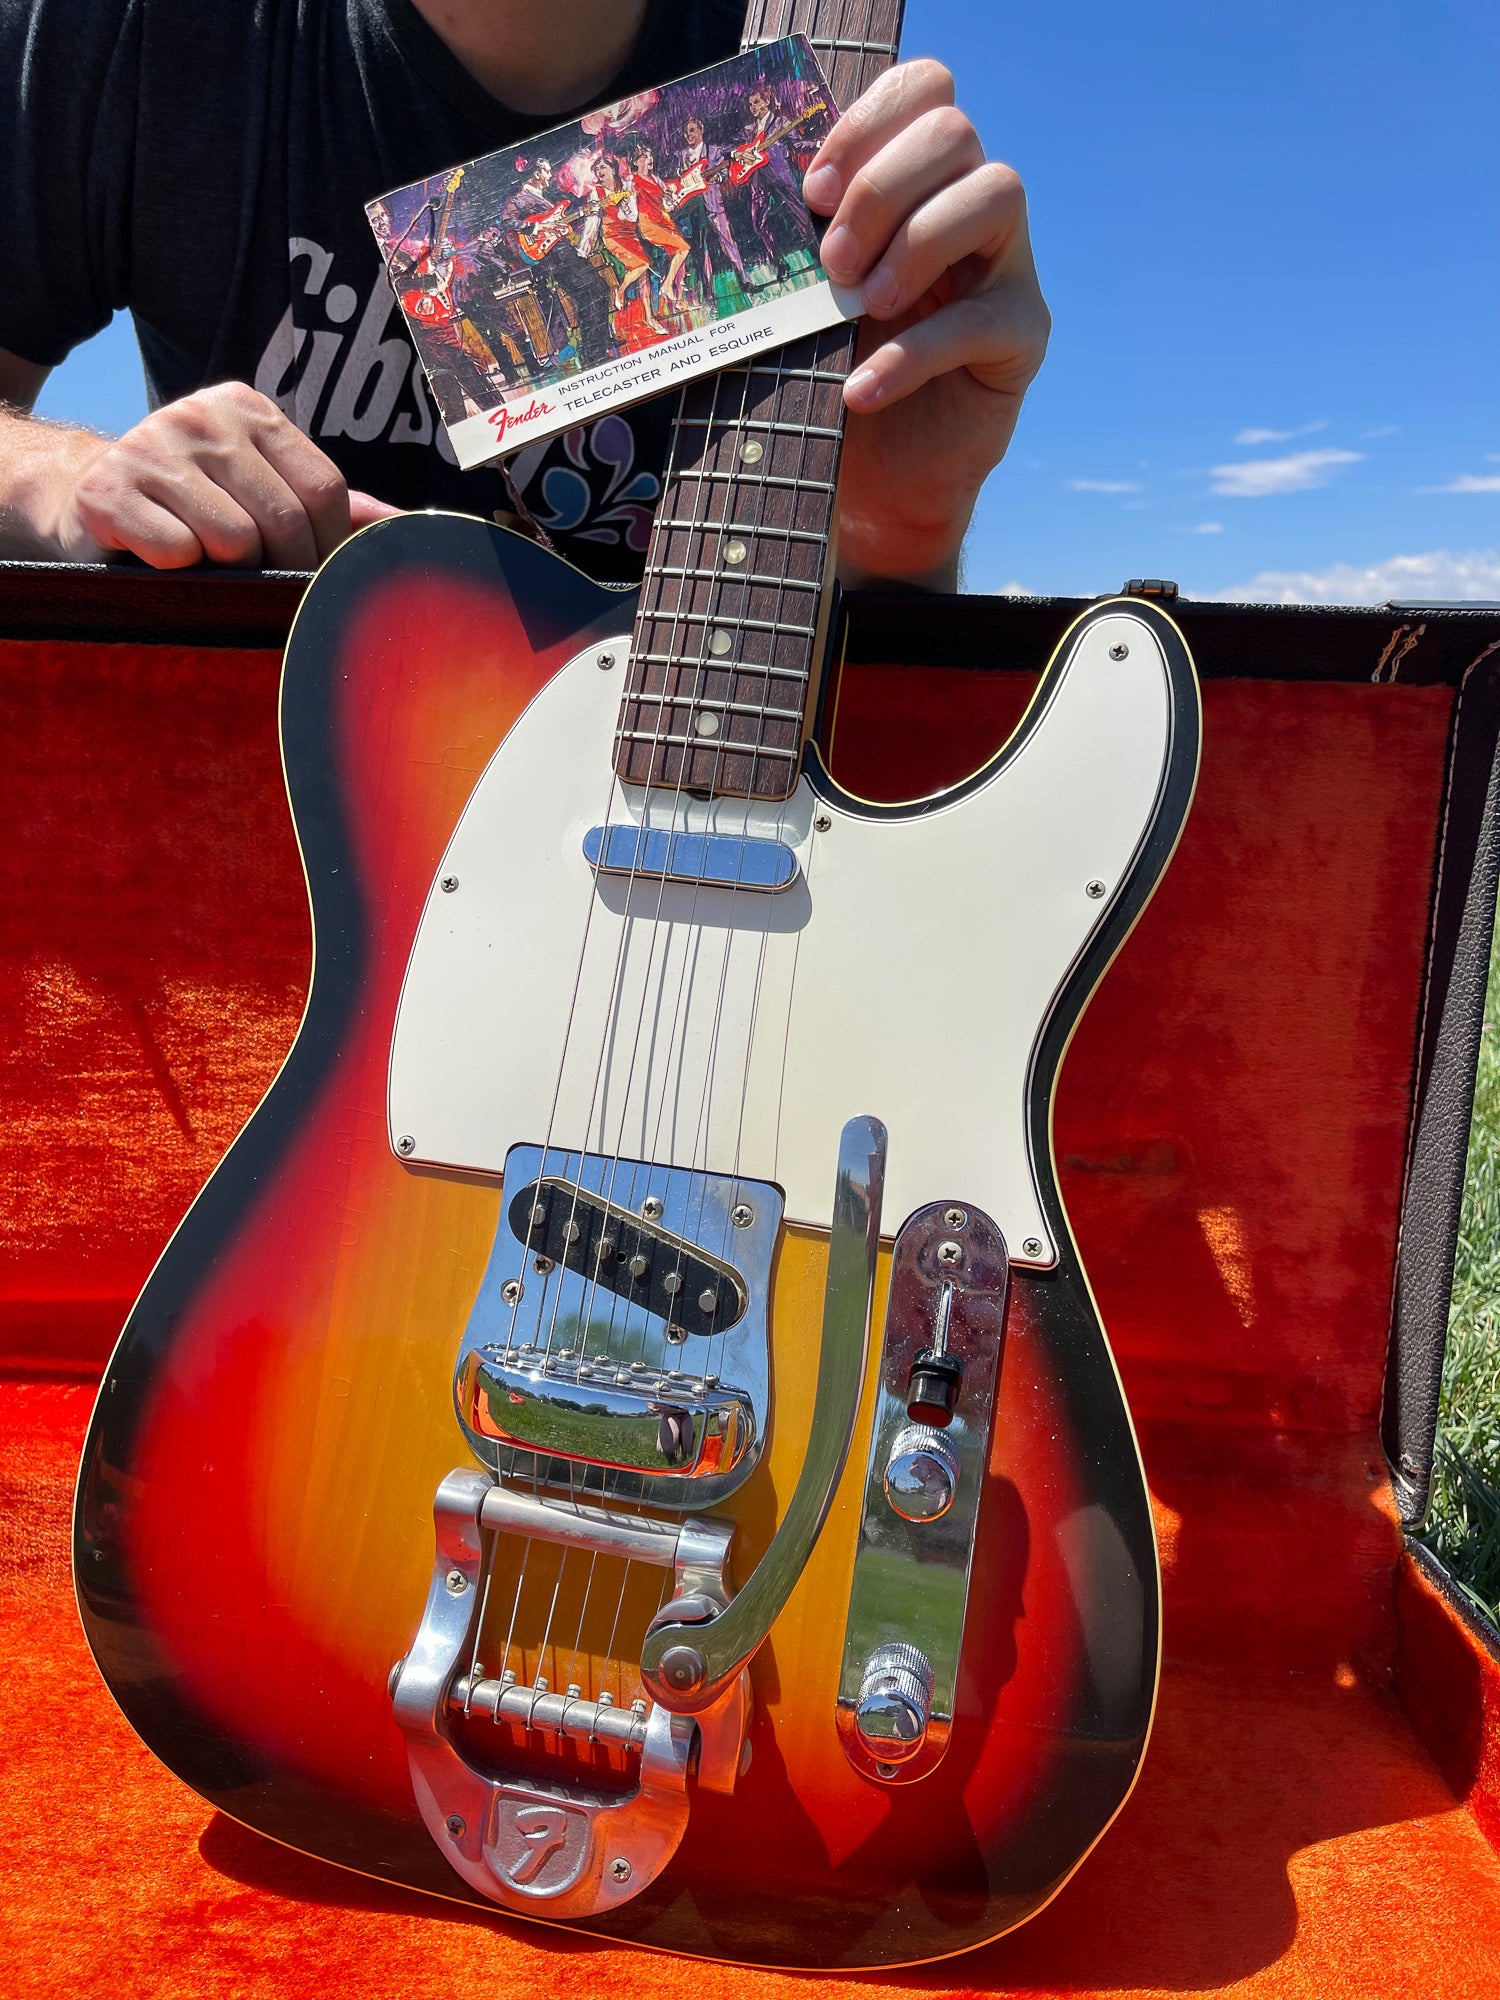 1968 Fender Telecaster Custom in guitar collection in Colorado